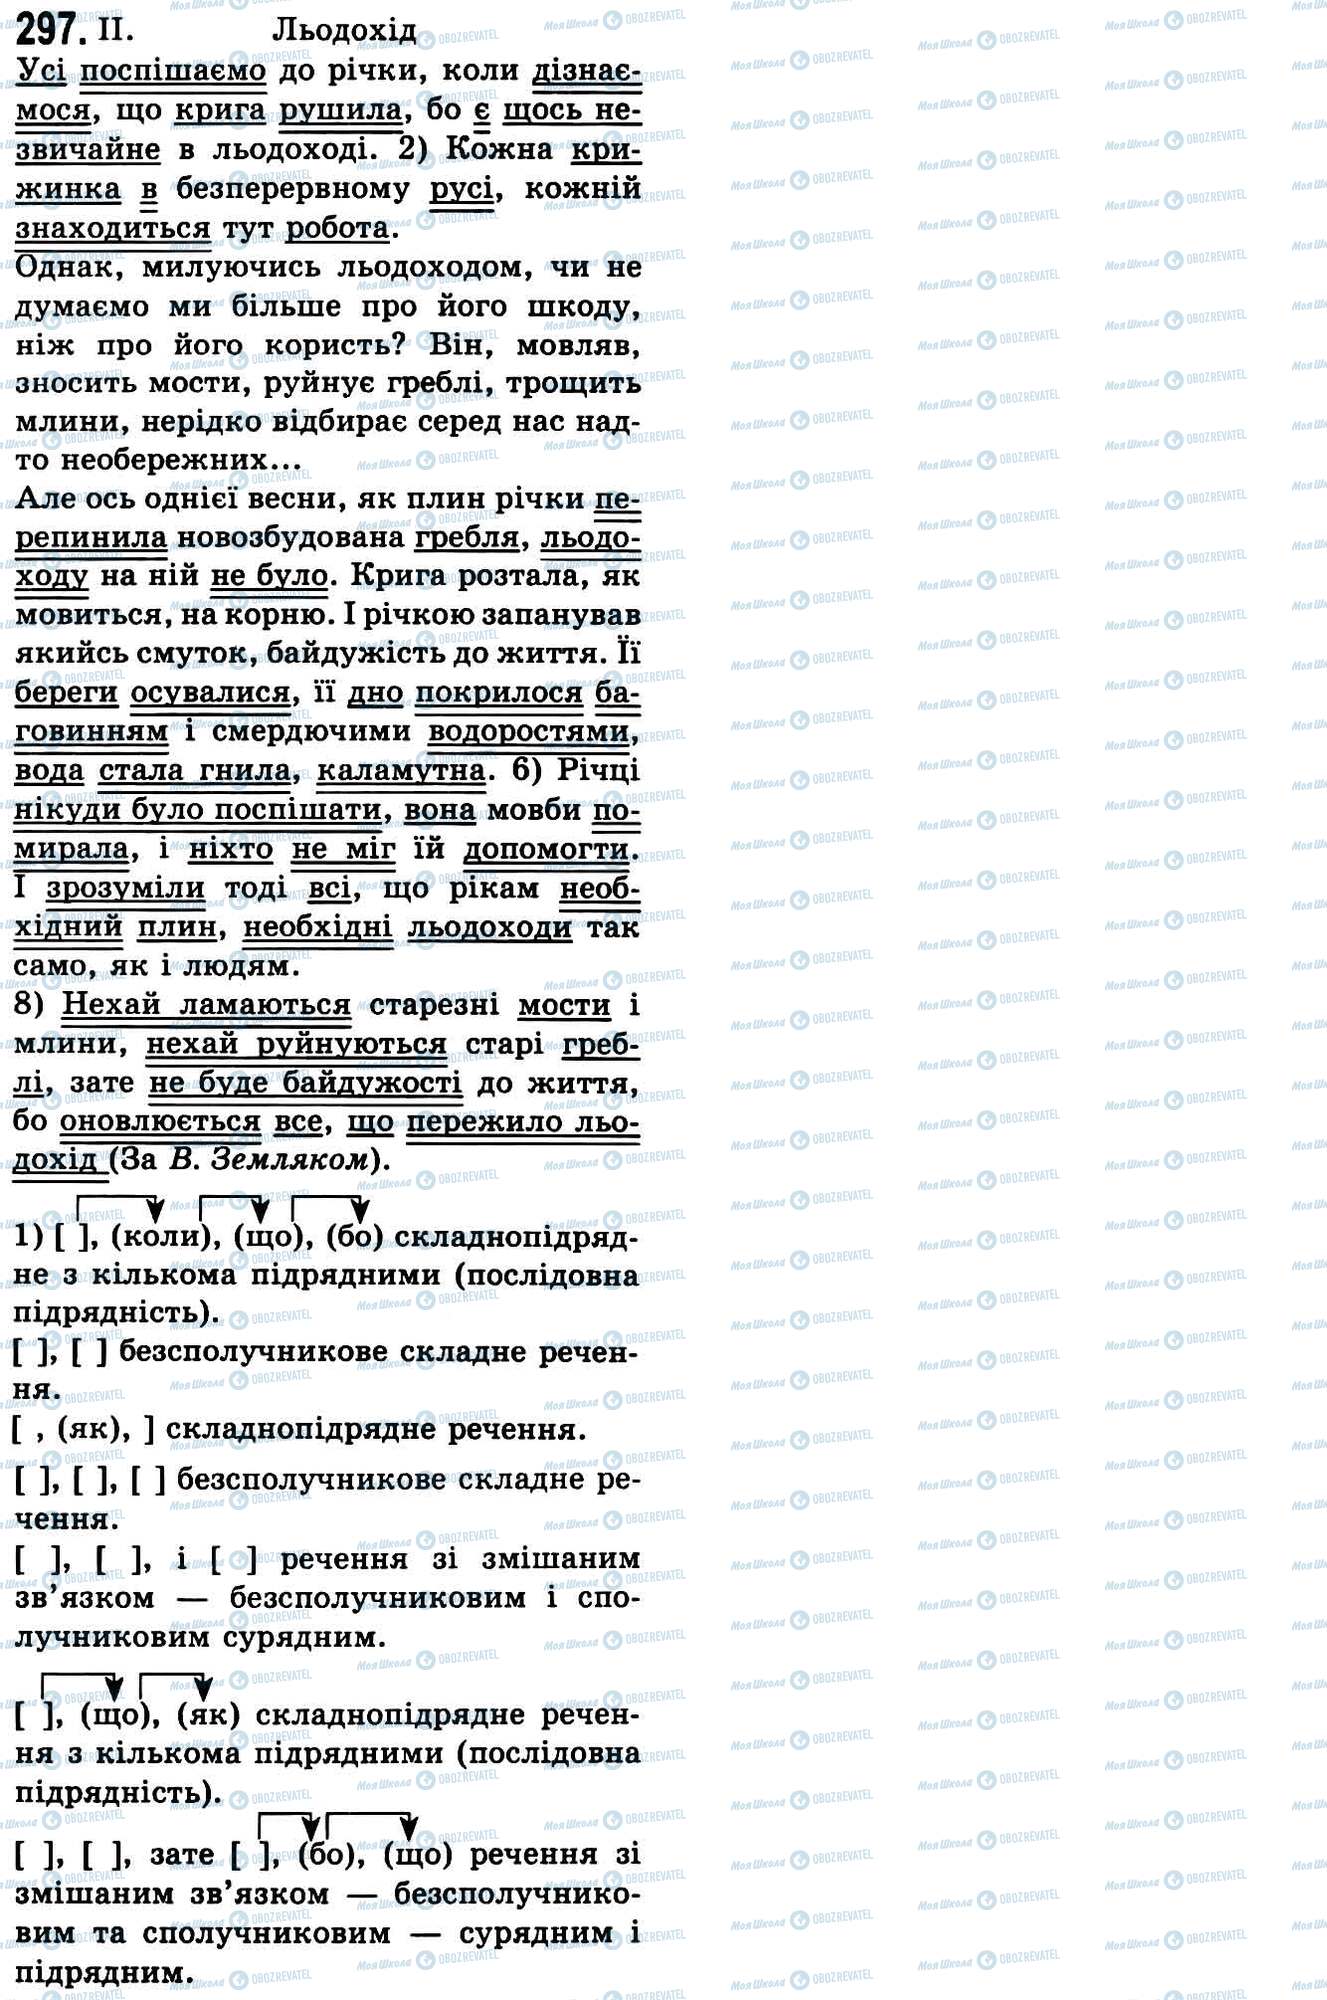 ГДЗ Укр мова 9 класс страница 297